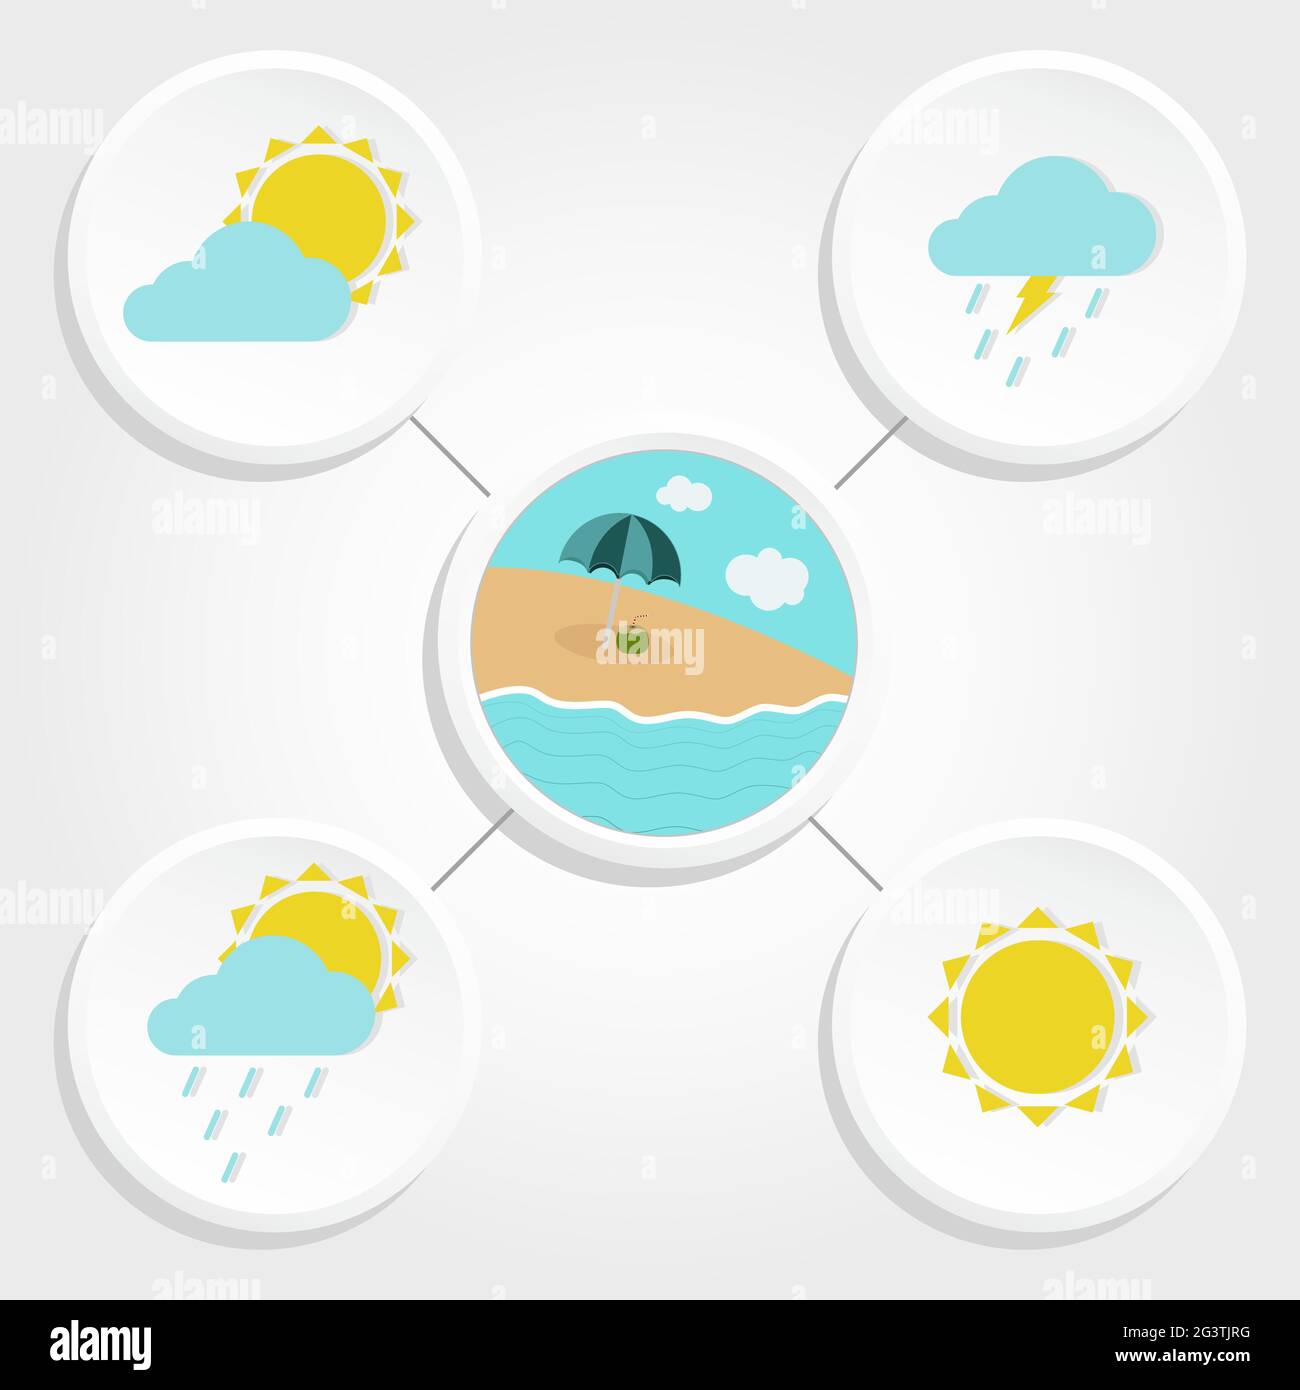 Detalle 10+ imagen tipos de clima dibujos